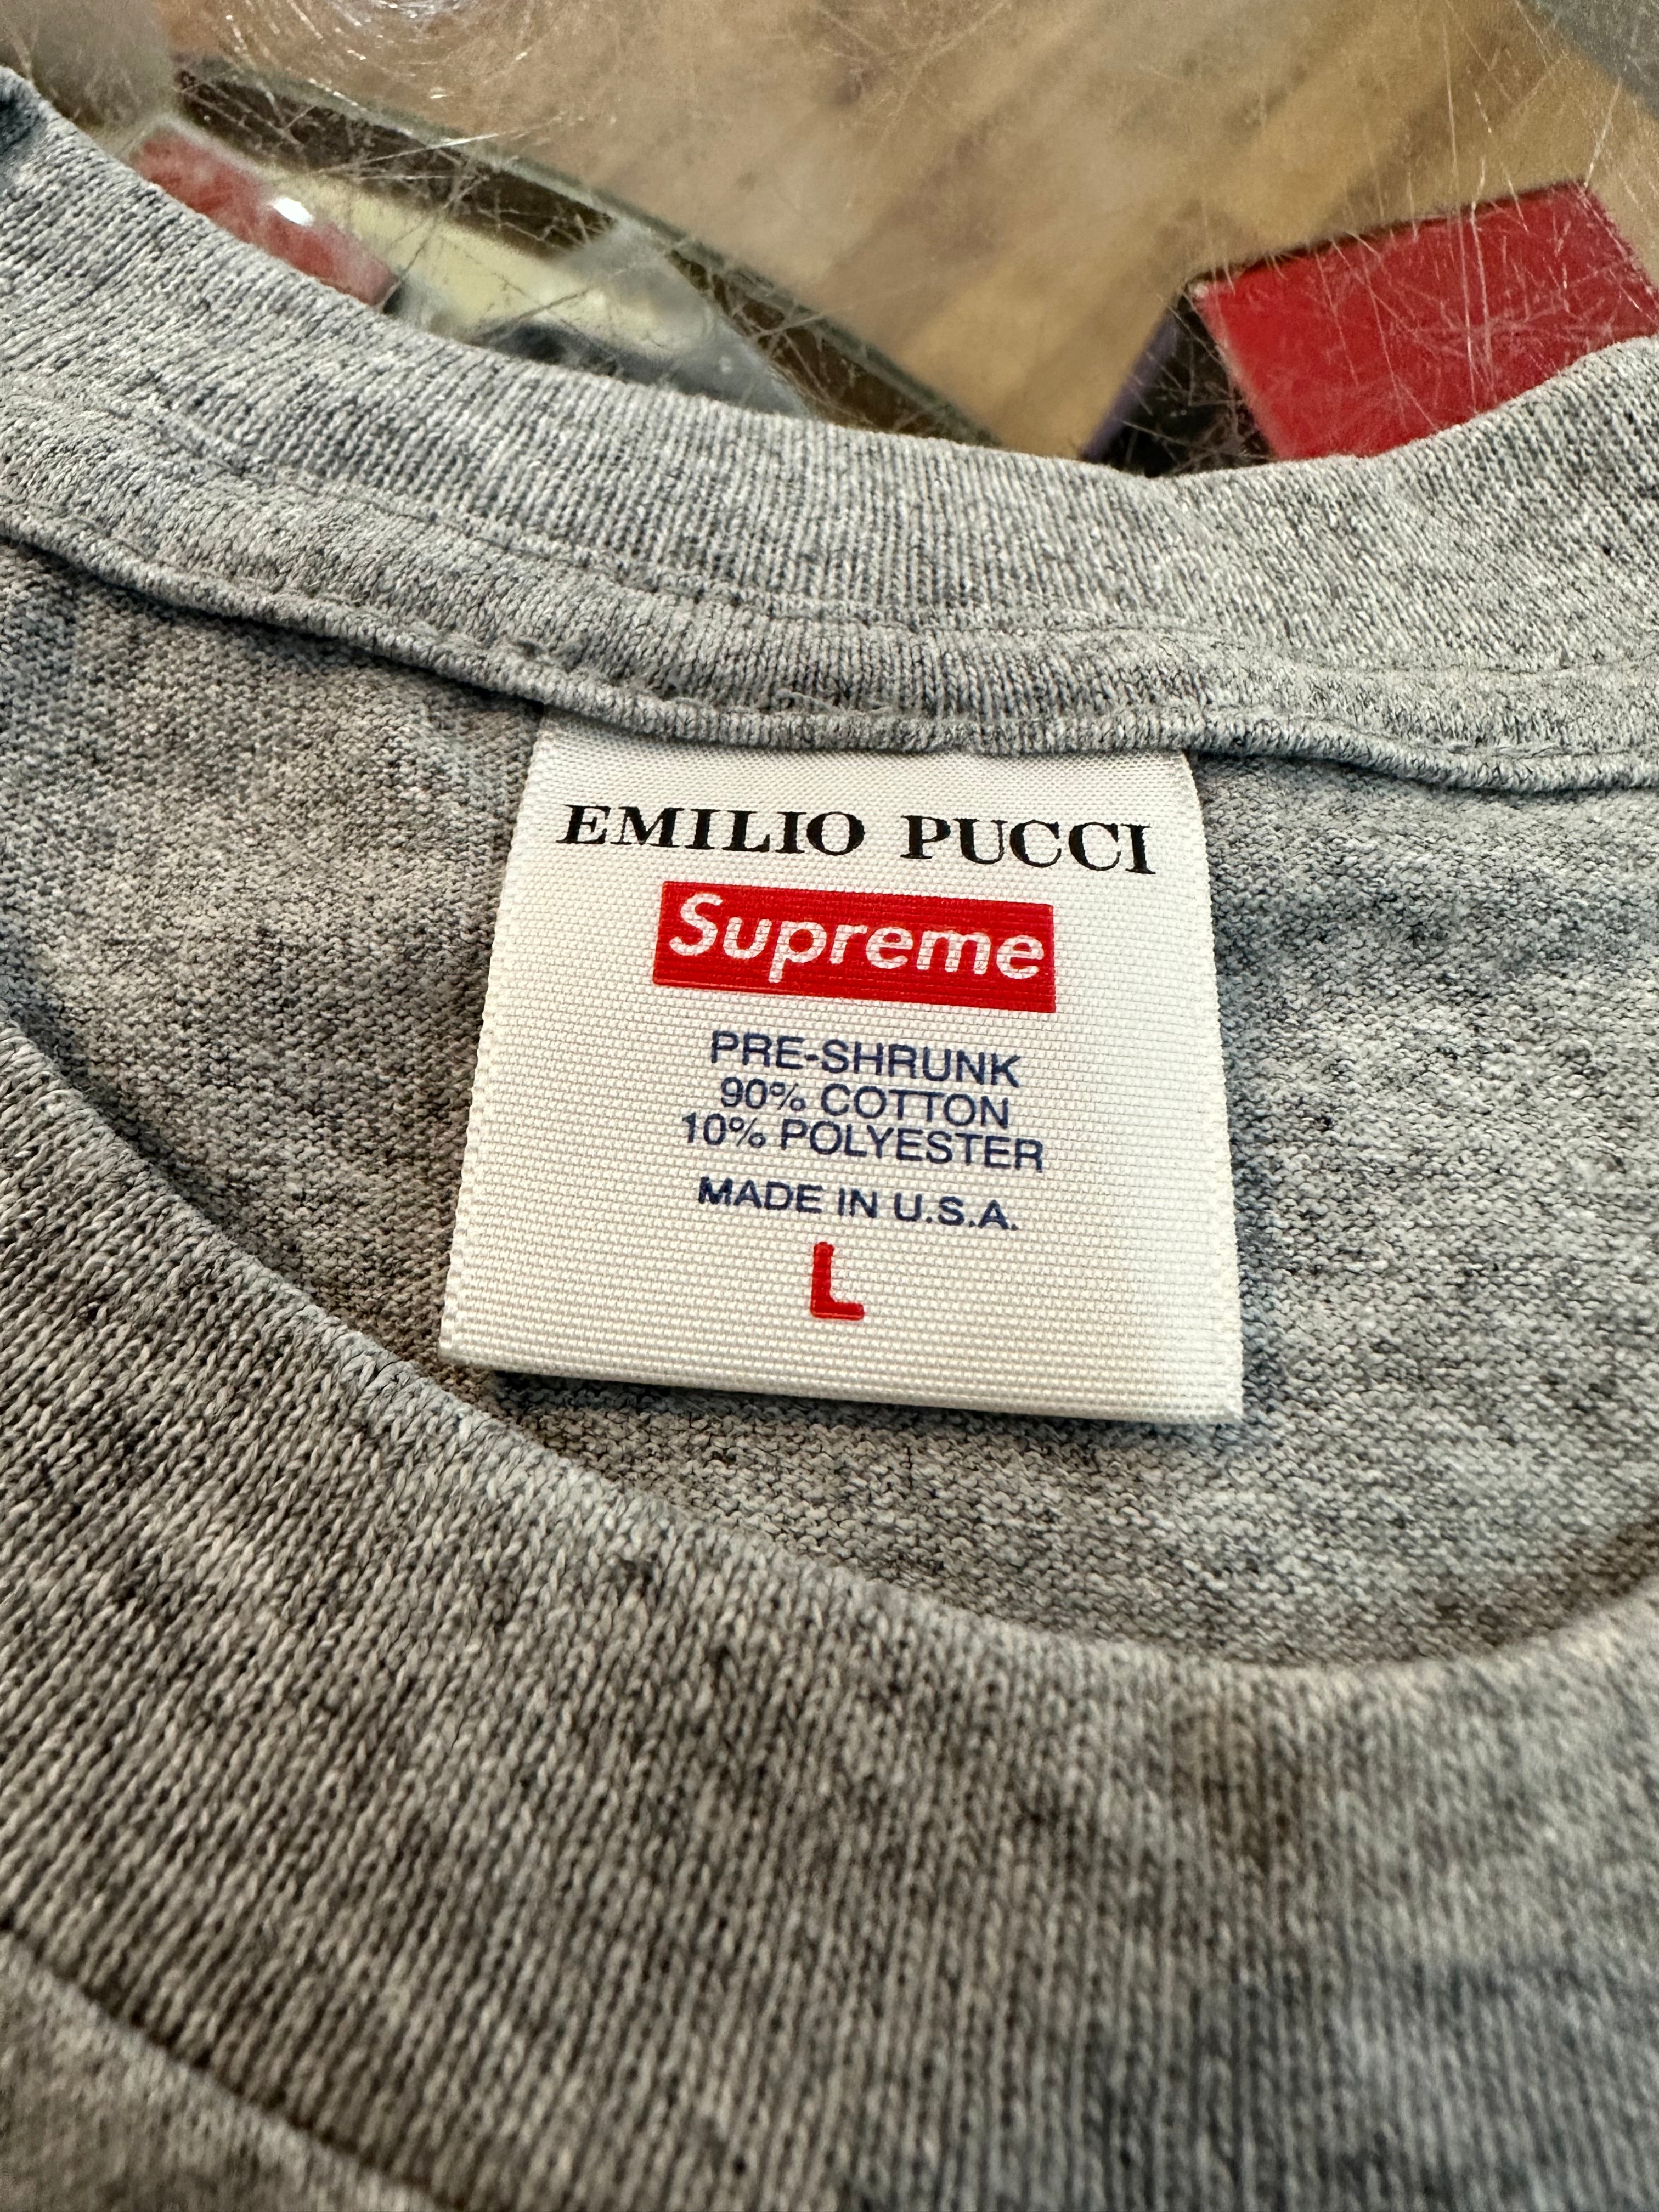 Brand new Heather Grey Supreme Emilio Pucci Box Logo Tee Size Large